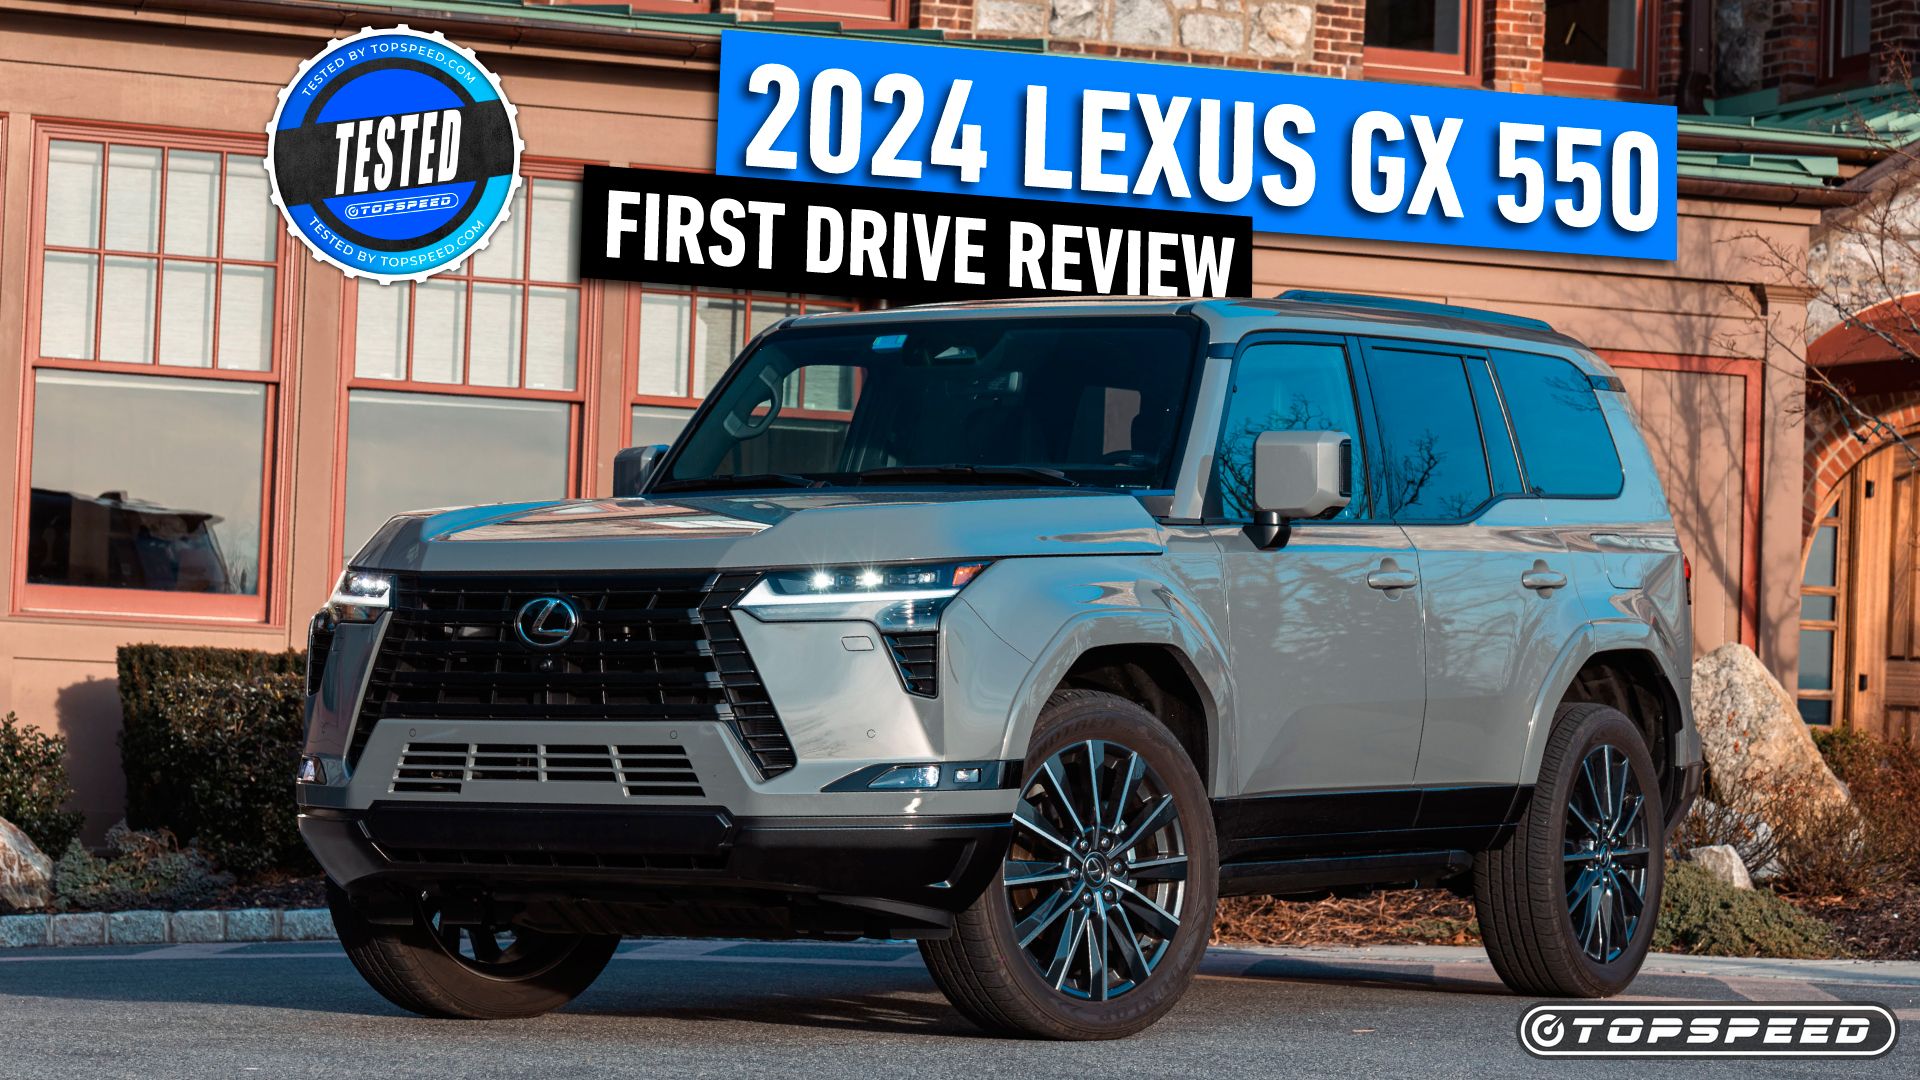 2024-Lexus-GX-550-First-Drive-Review-1